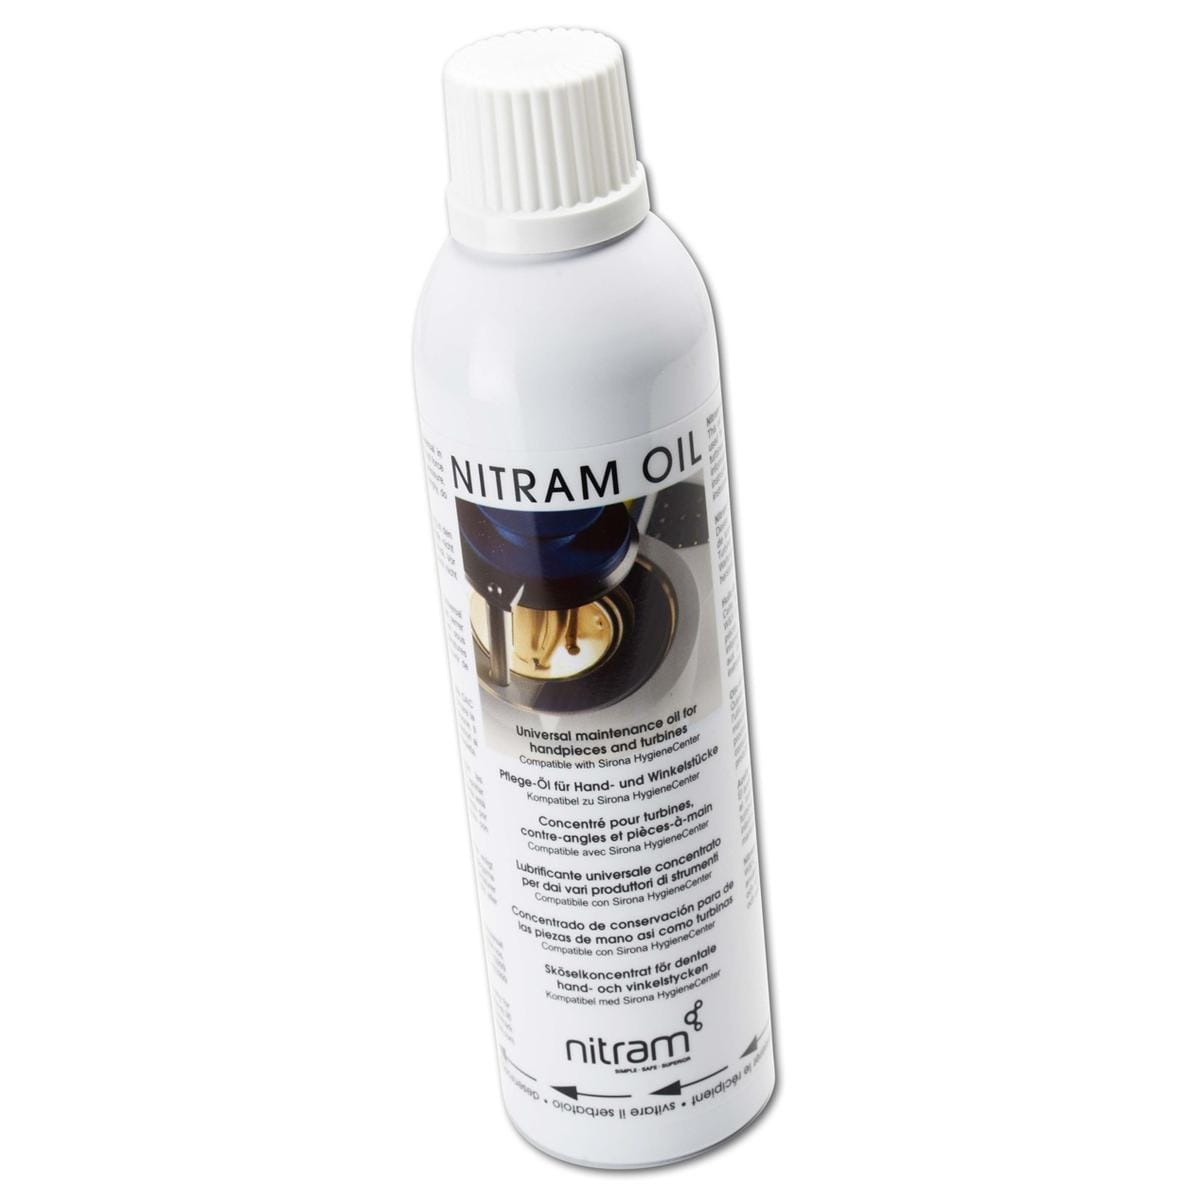 DAC Universal smeermedium Nitram Oil #1 (wit) - Bus, 200 ml